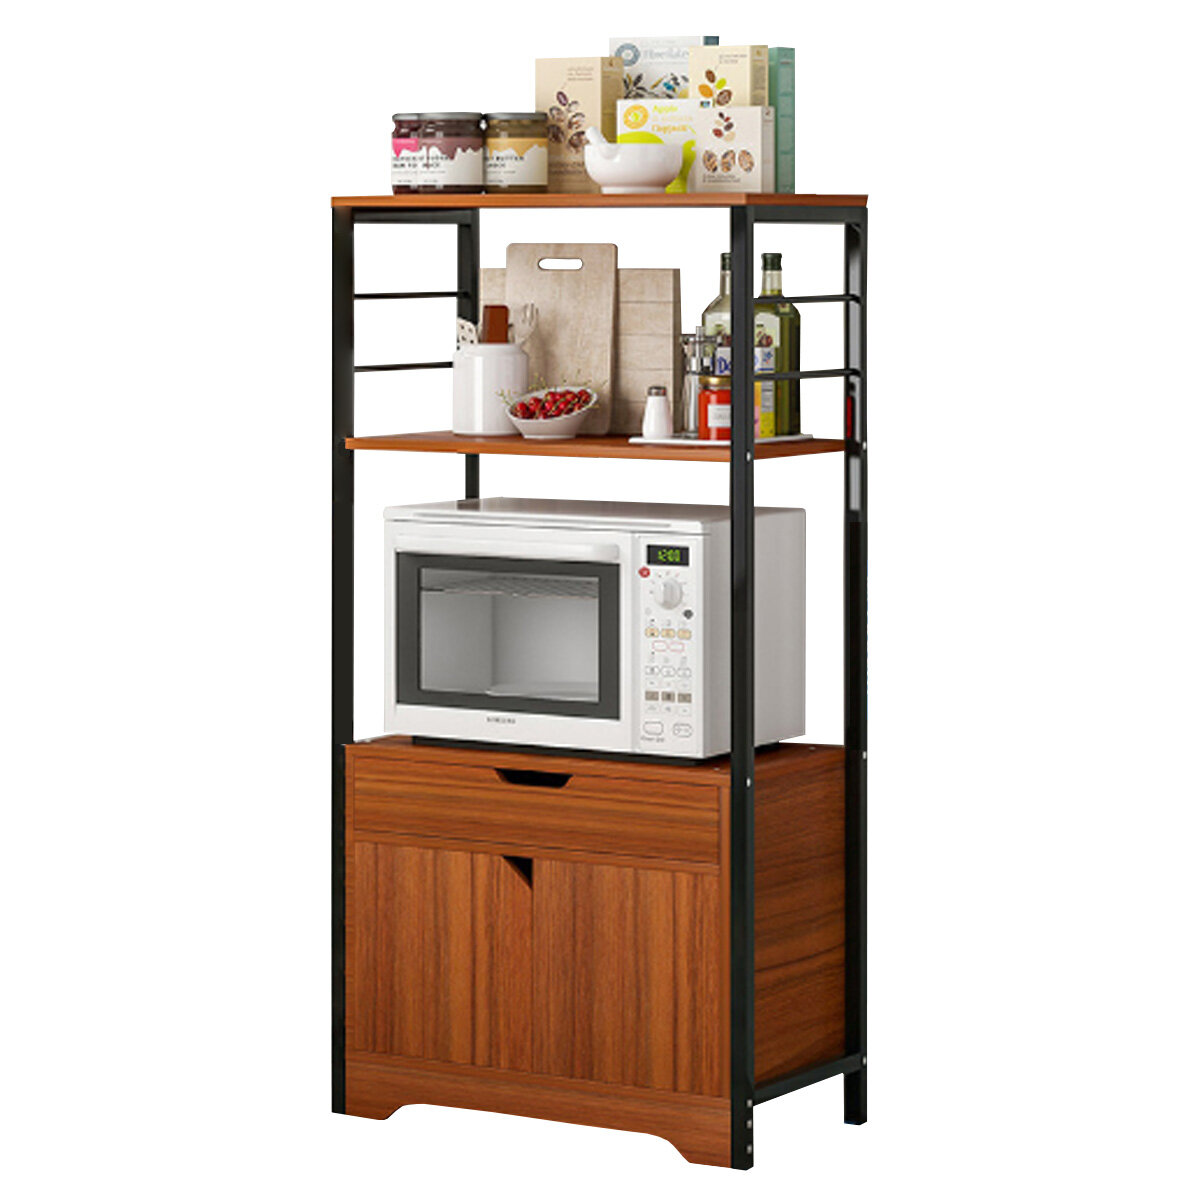 Image of 3 Tiers Microwave Oven Rack Kitchen Cupboard Rack Storage Shelf Storage Cabinet Desktop Space Saving Organizer